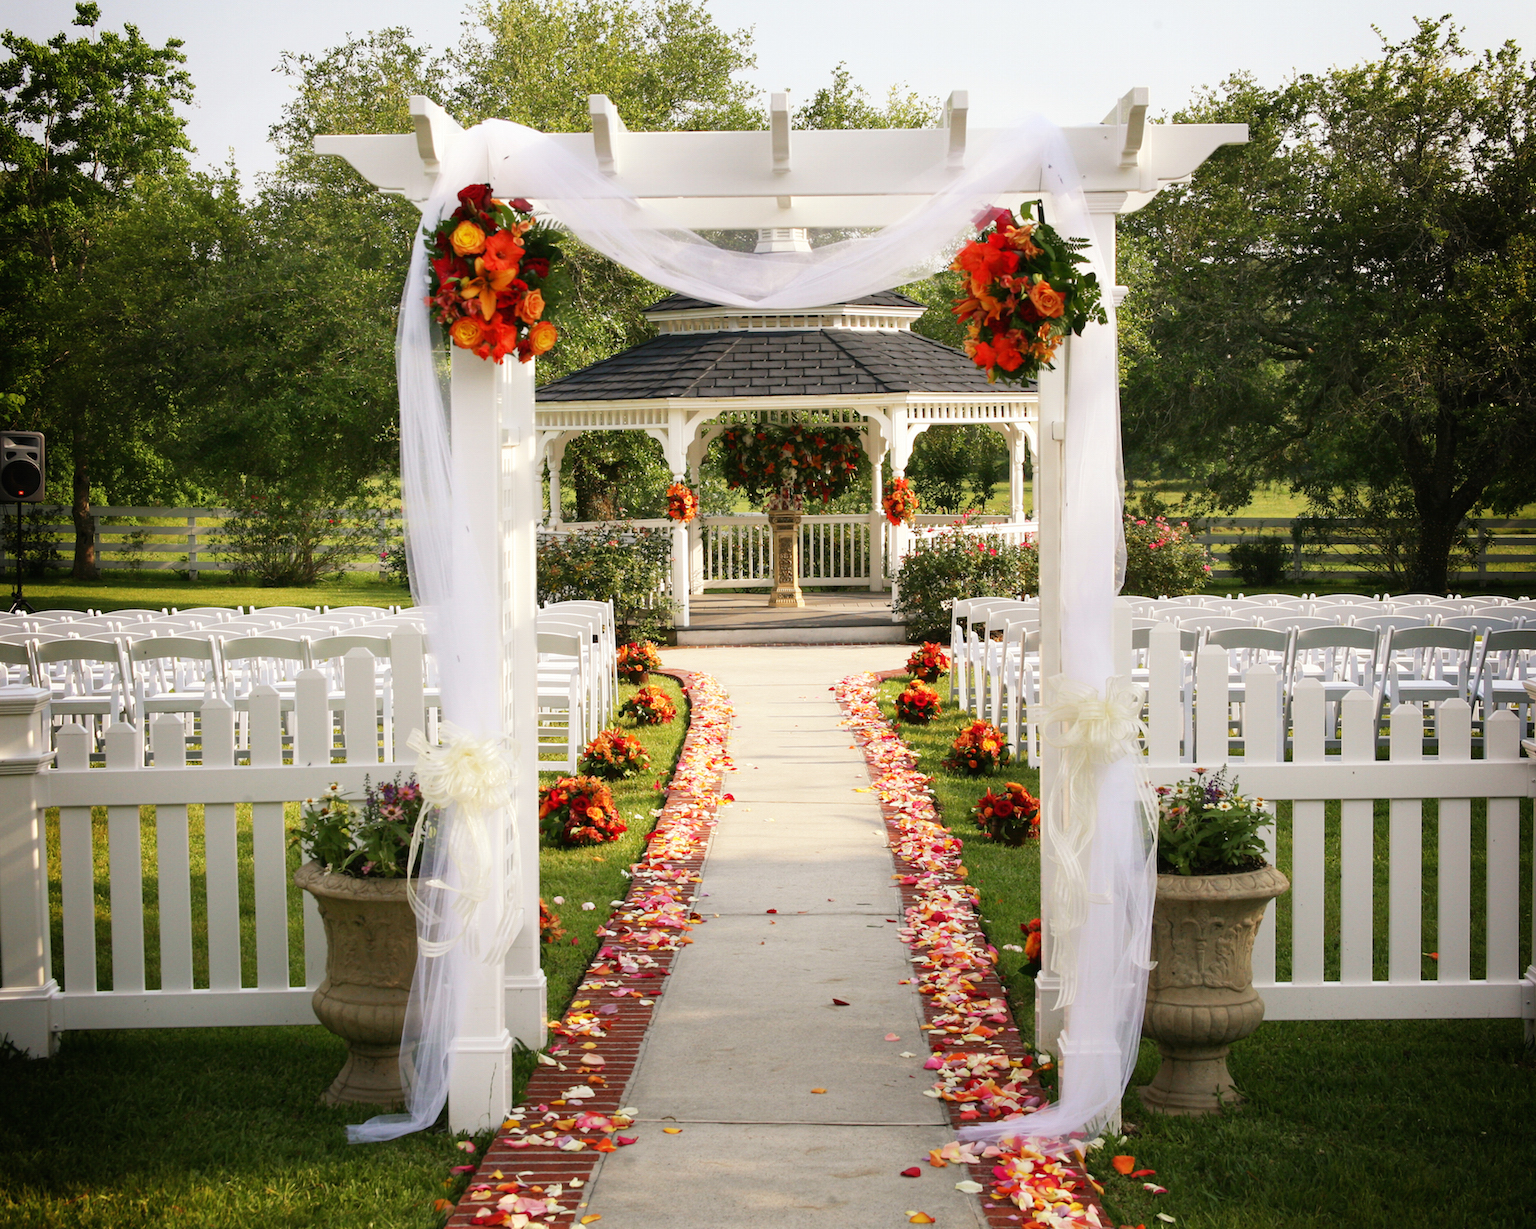 Garden Gazebo Wedding Ceremony Aisle Decorating Ideas With Best Design And Outdoor Wedding Ceremony Decorations 